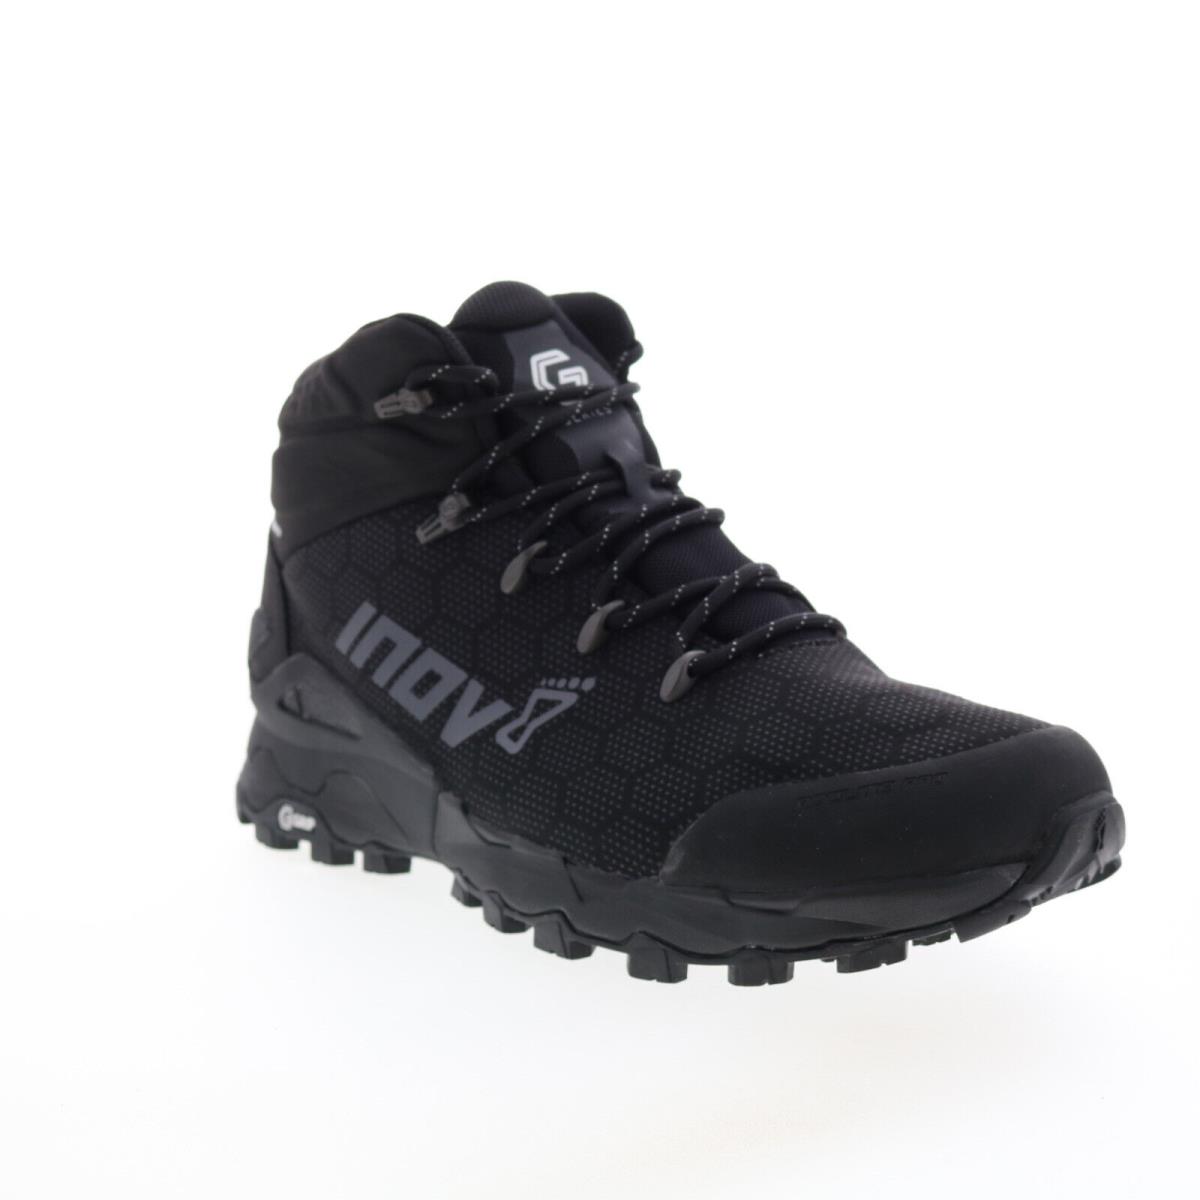 Inov-8 Roclite Pro G 400 Gtx 000950-BK Mens Black Synthetic Hiking Boots - Black